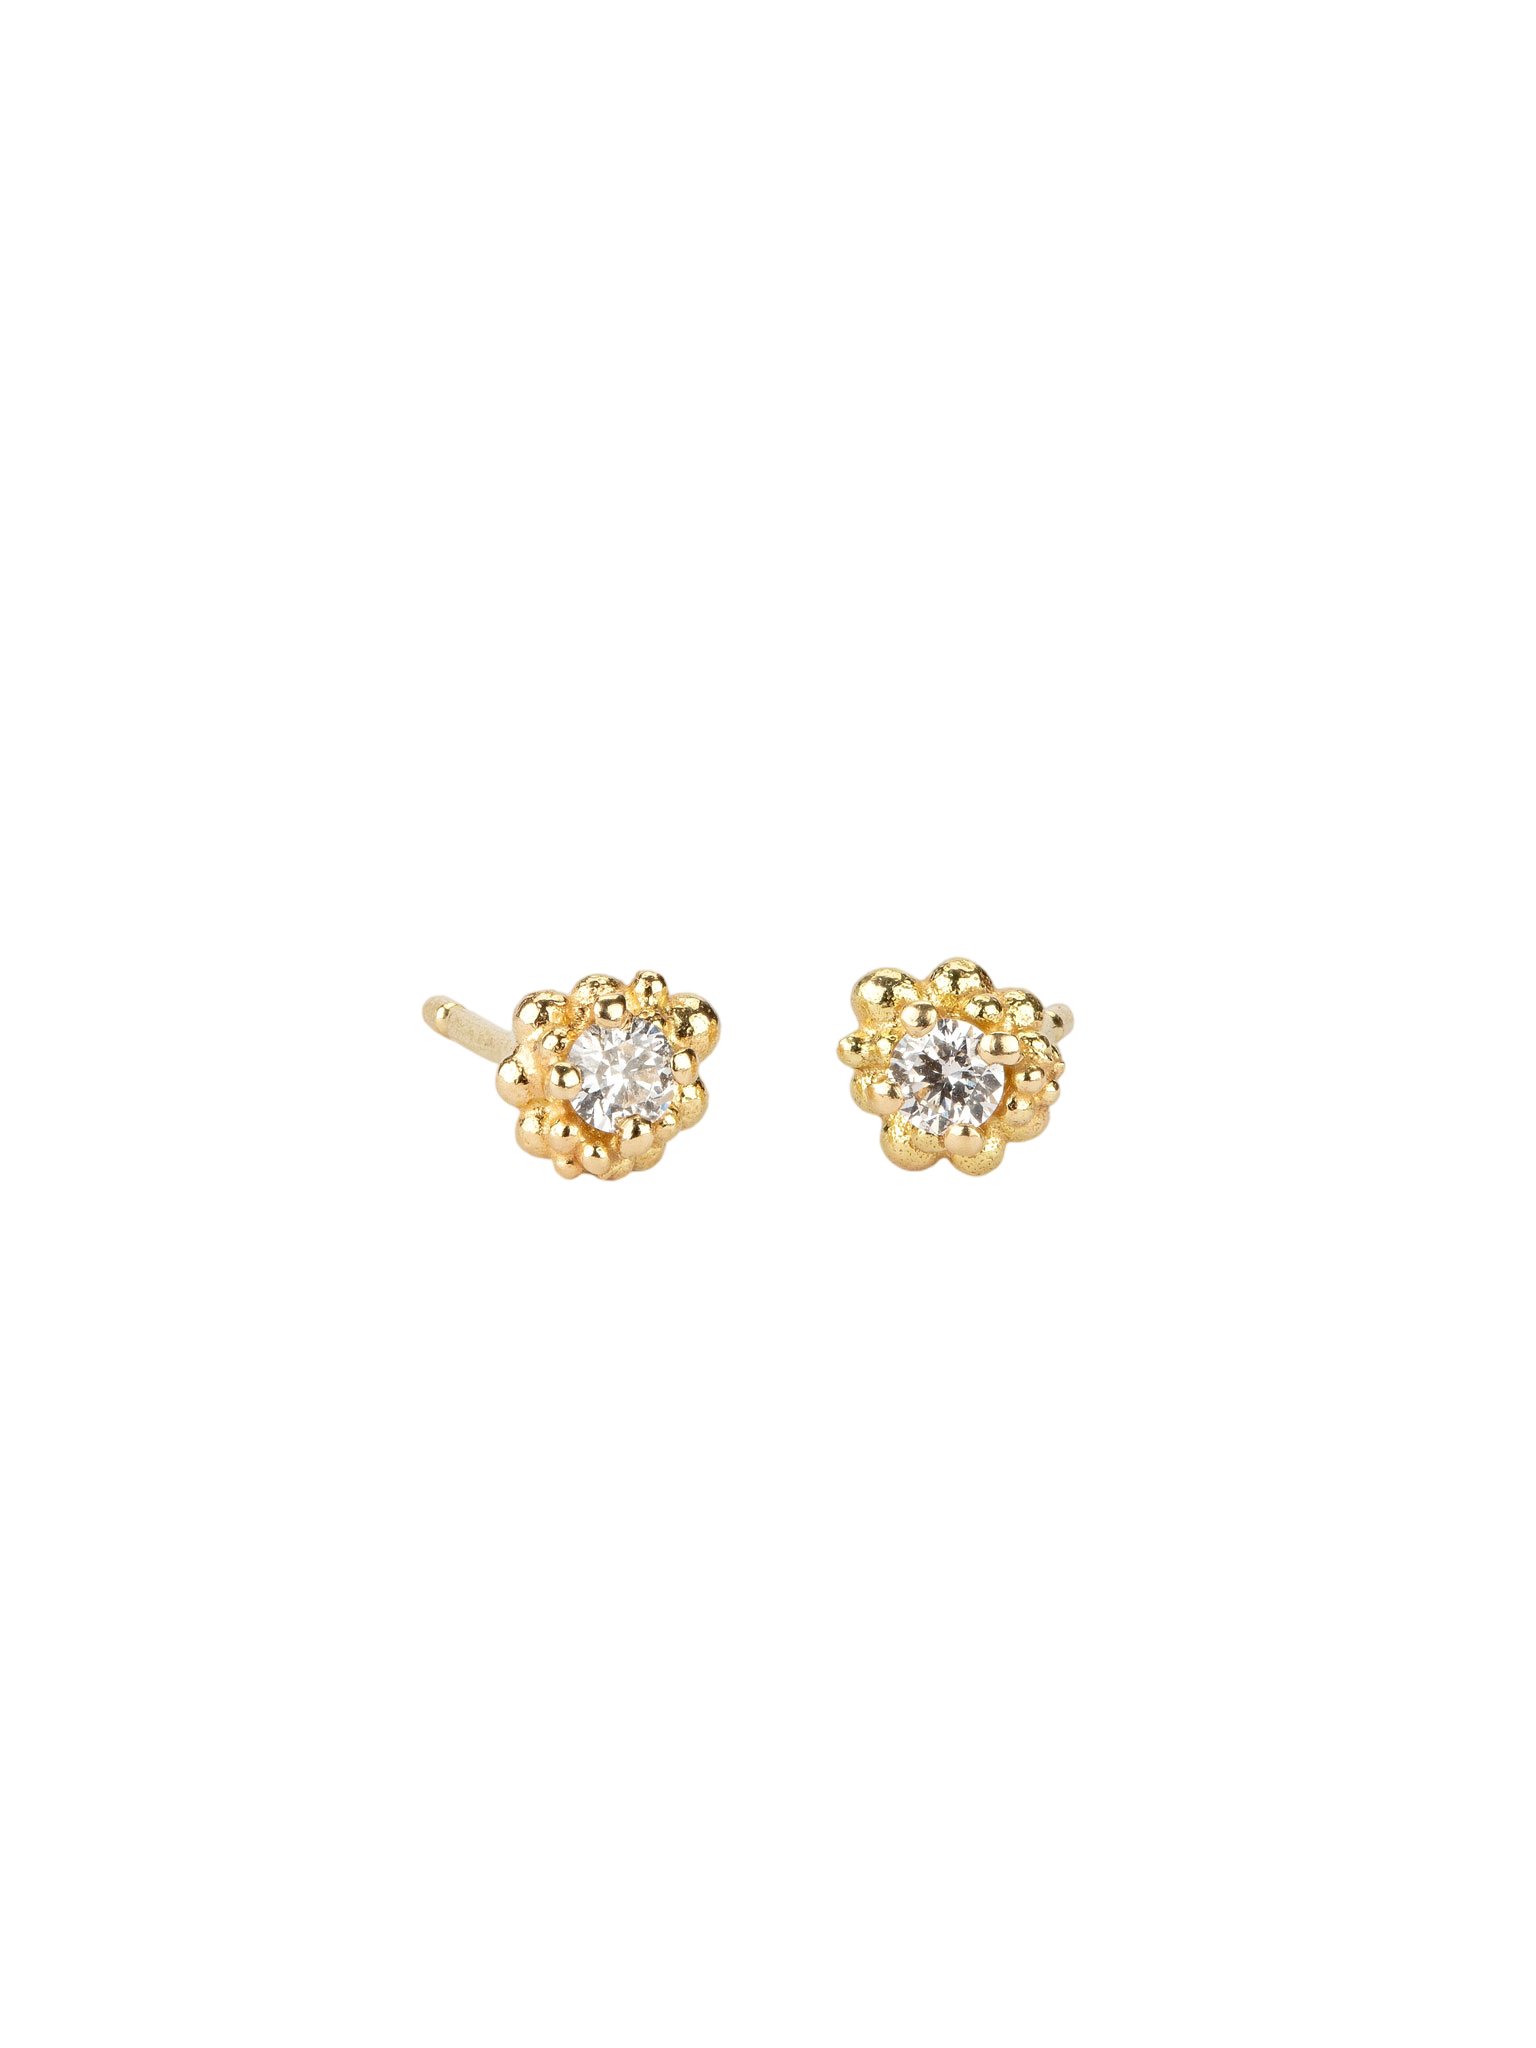 Small cluster diamond earrings